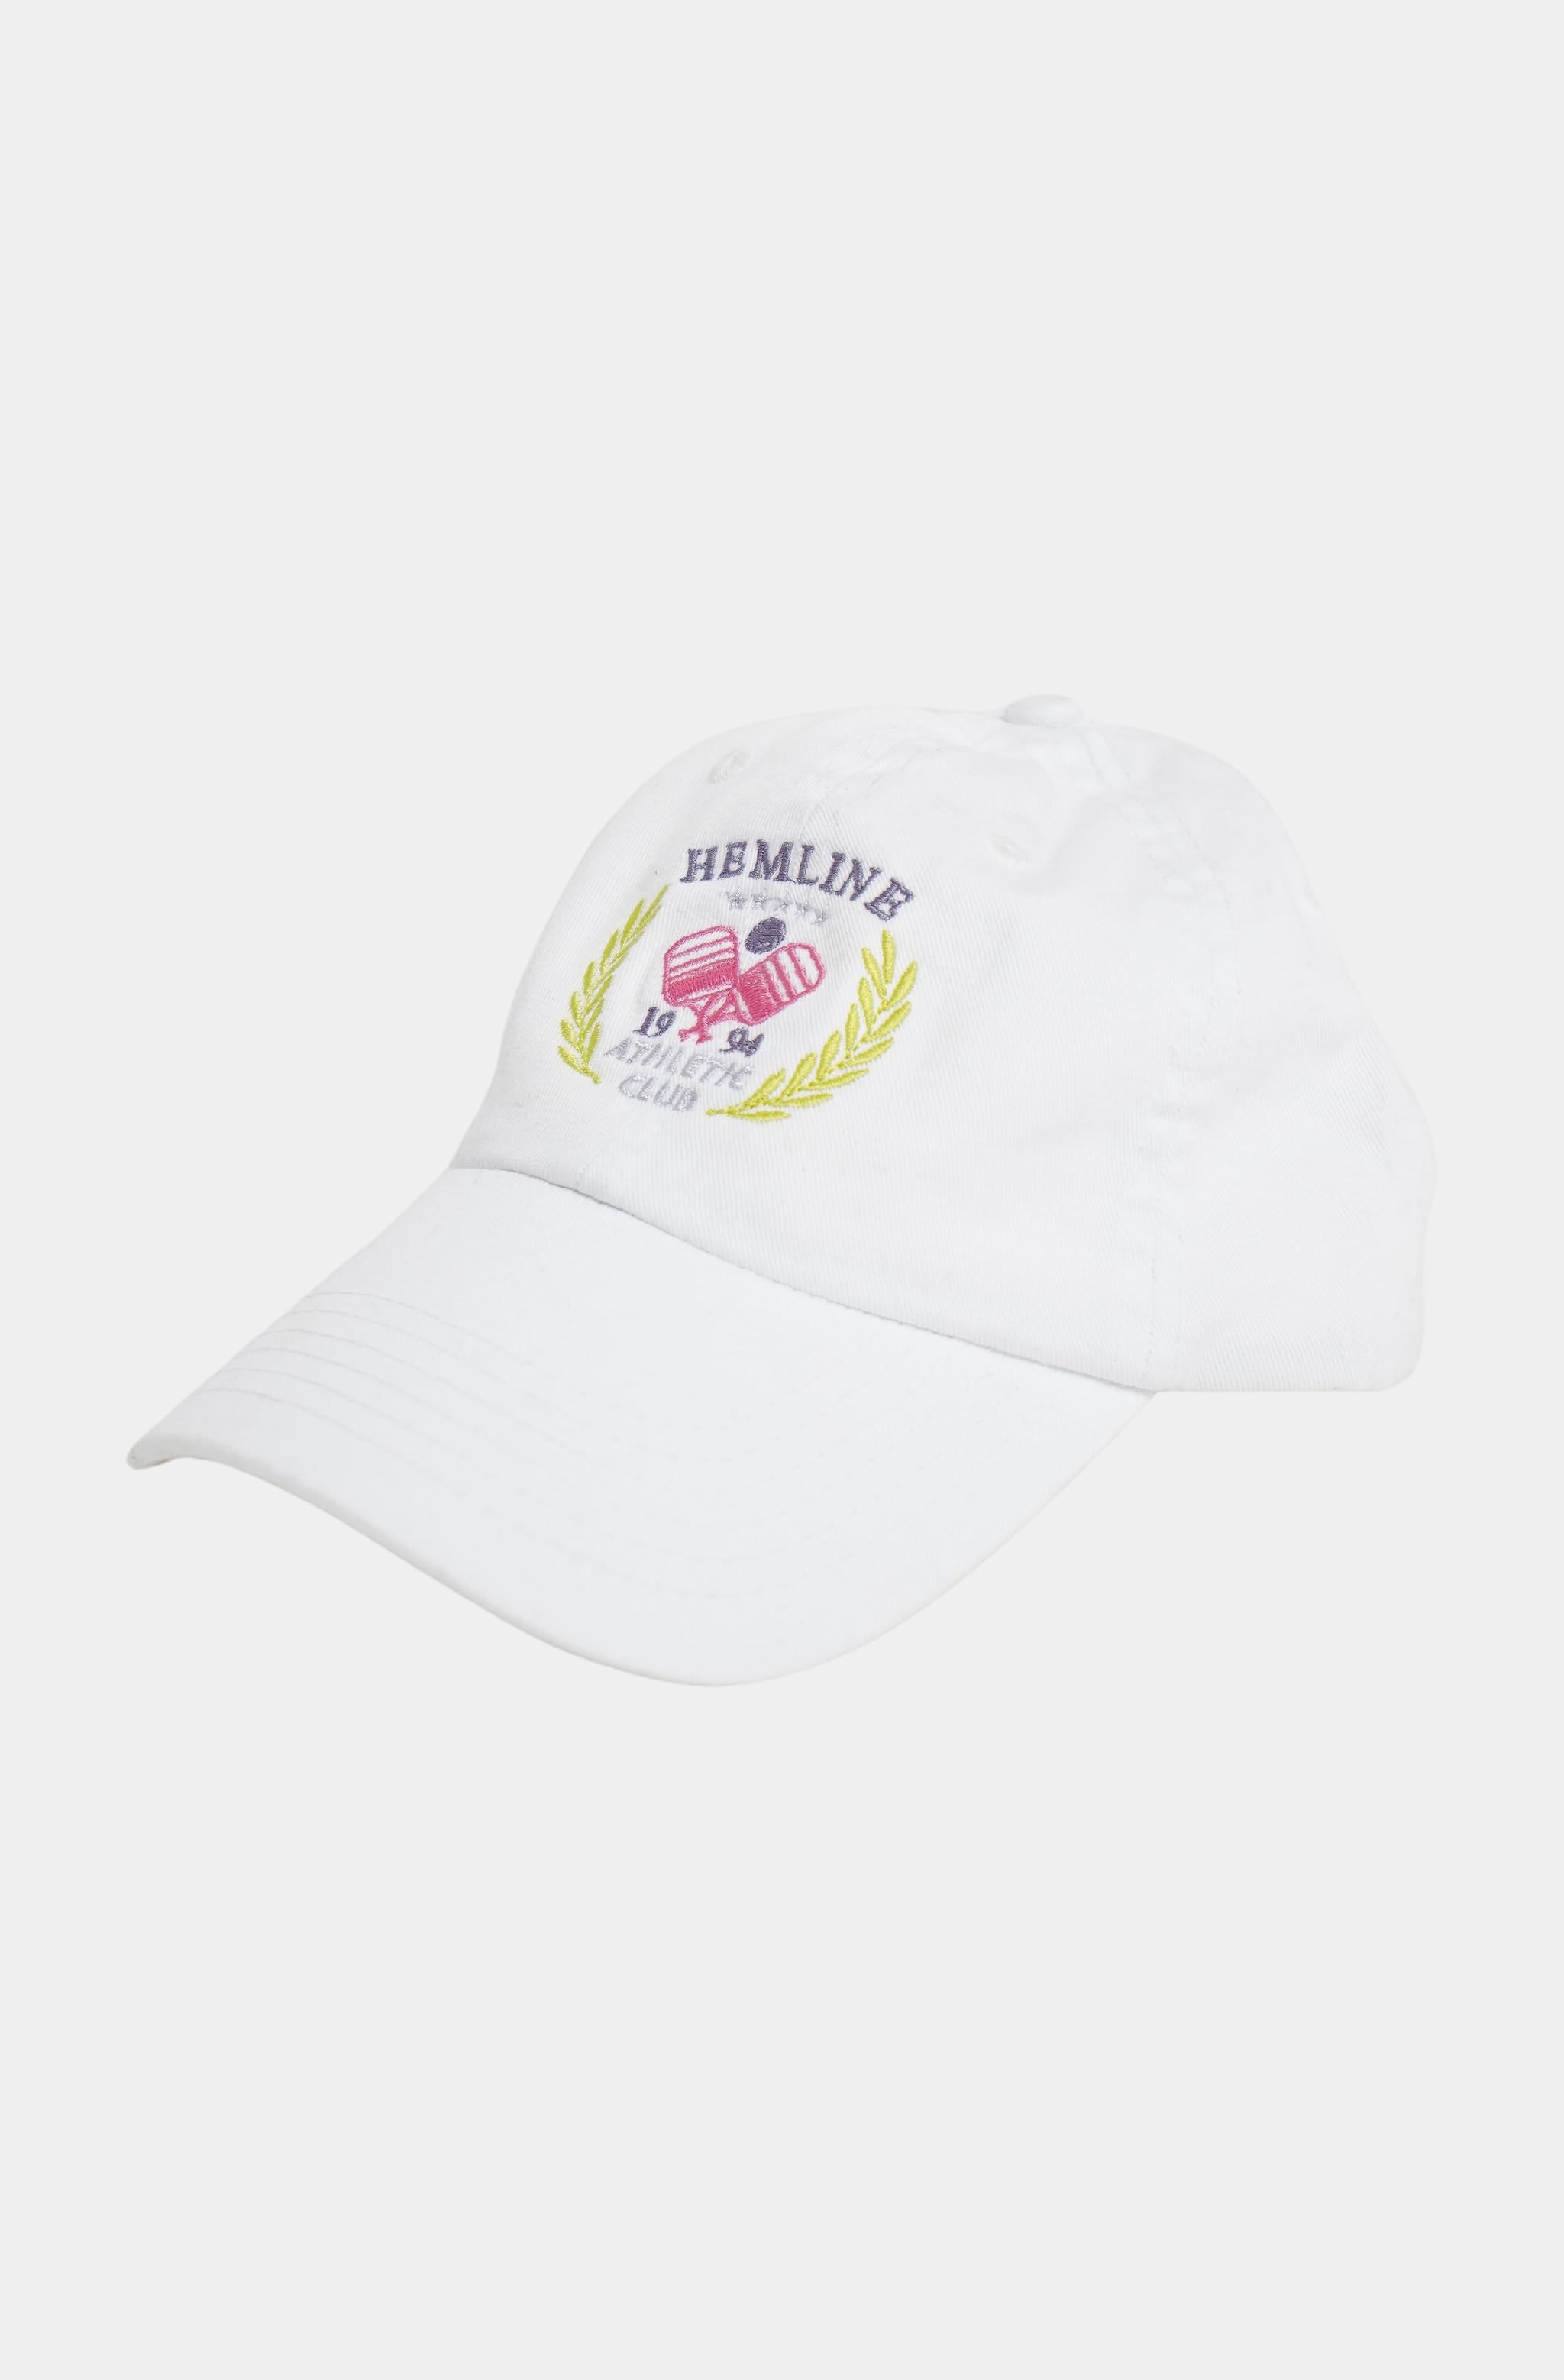 Hemline Athletic Club Hat